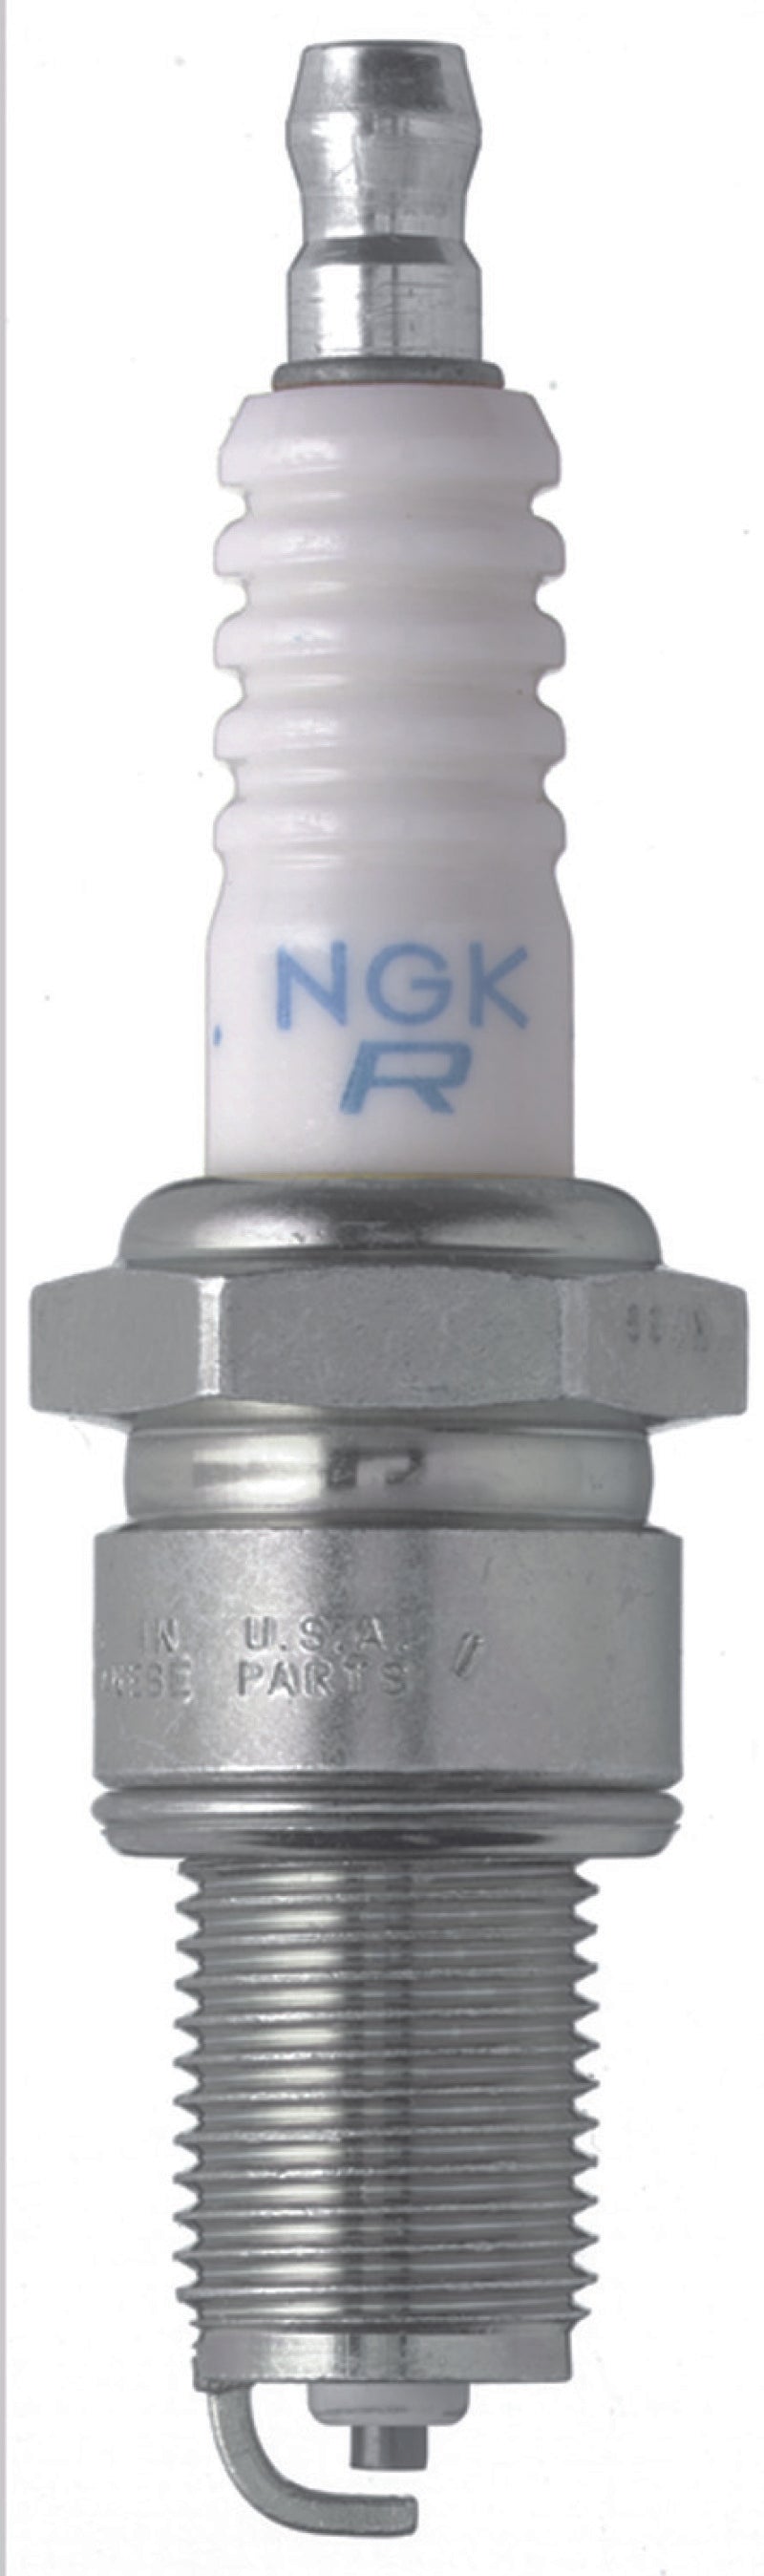 NGK Traditional Spark Plug Box of 4 (BPR7ES).